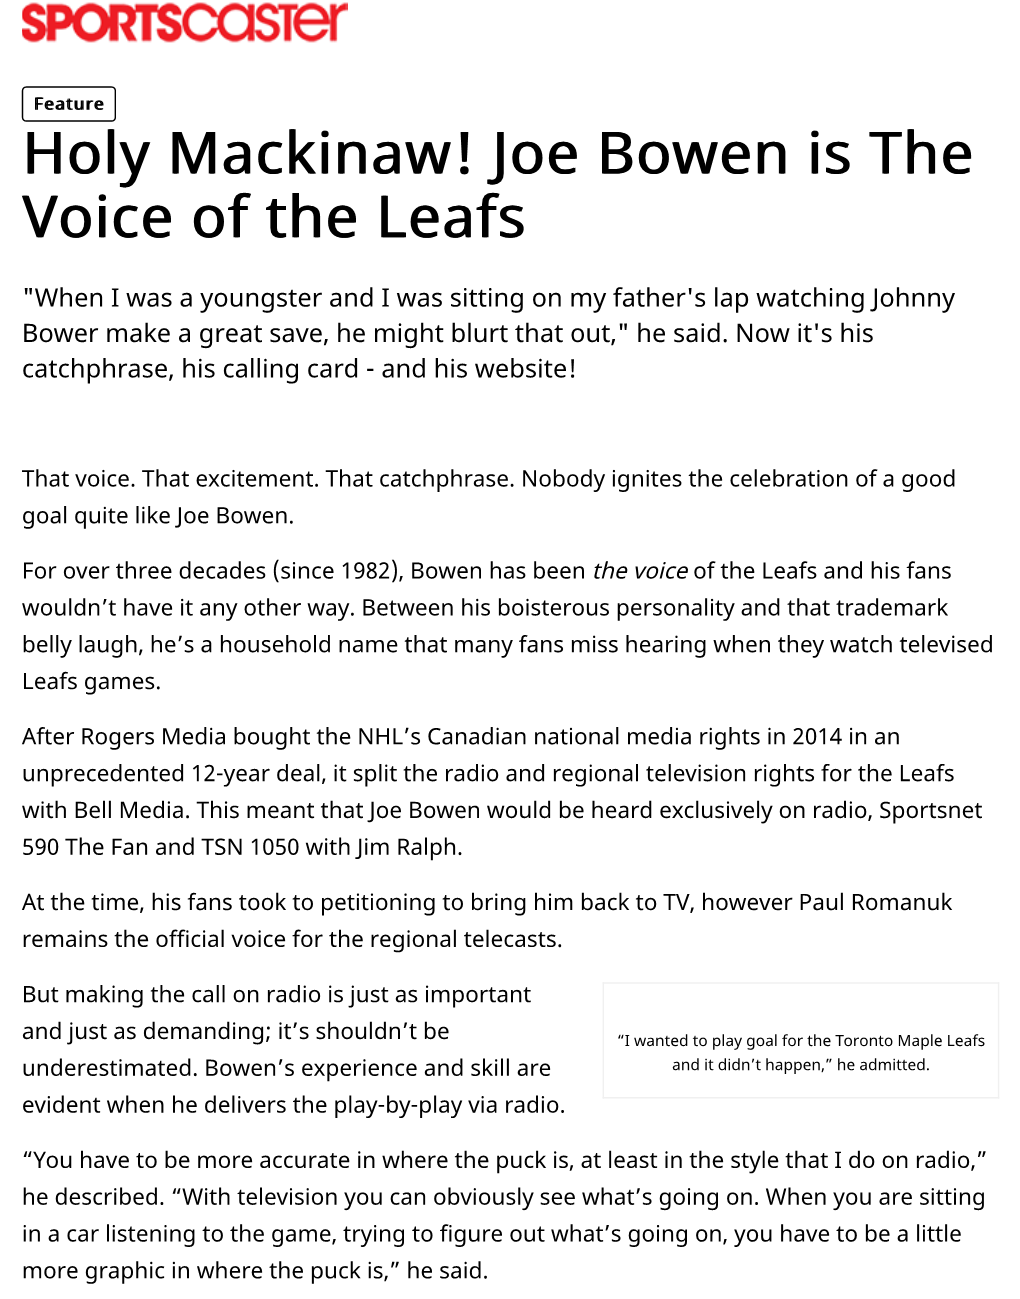 Holy Mackinaw! Joe Bowen Is the Voice of the Leafs